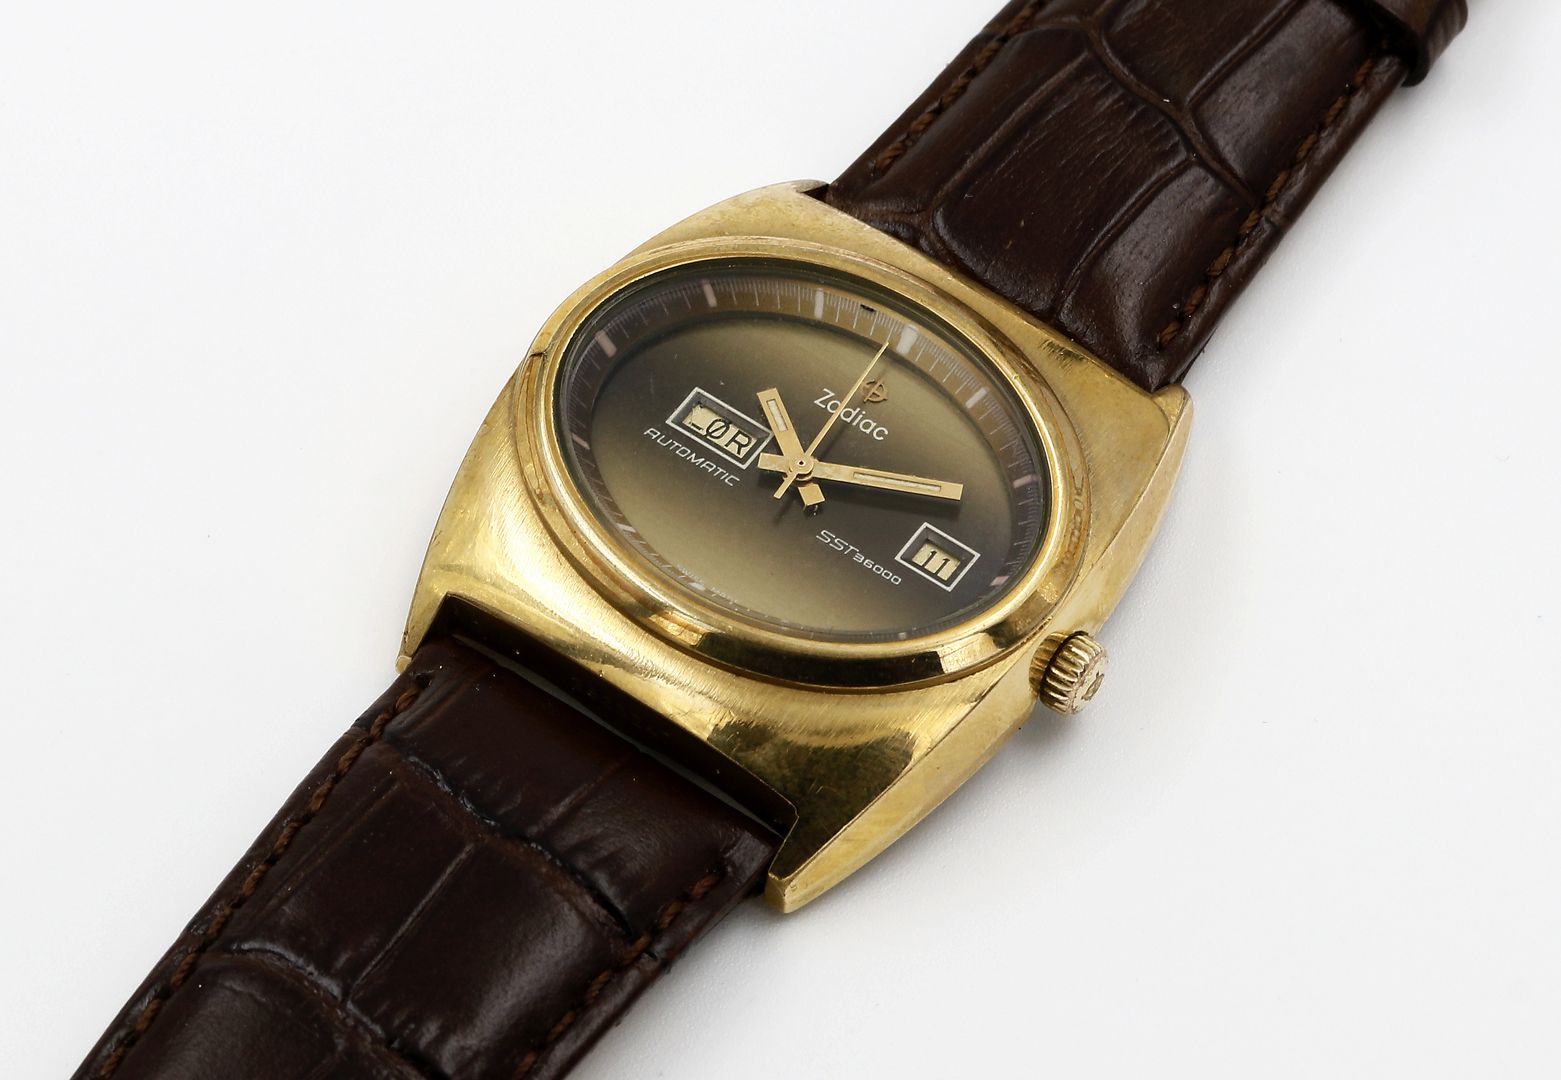 Vintage-Armbanduhr "Zodiac automatic".